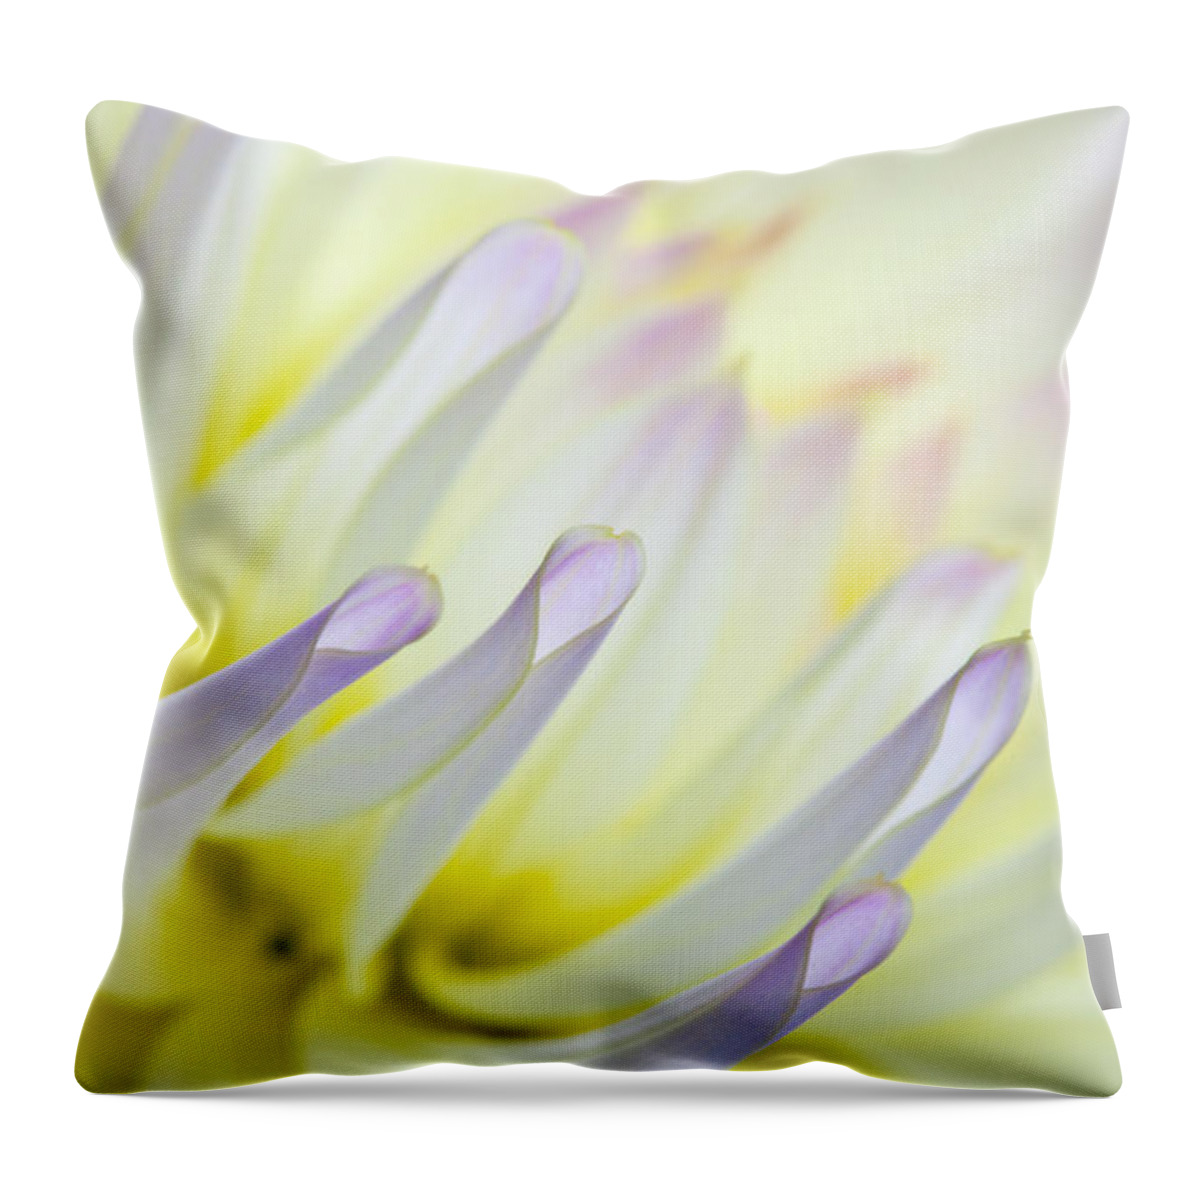 Dahlia Throw Pillow featuring the photograph Dahlia Flower 09 by Nailia Schwarz